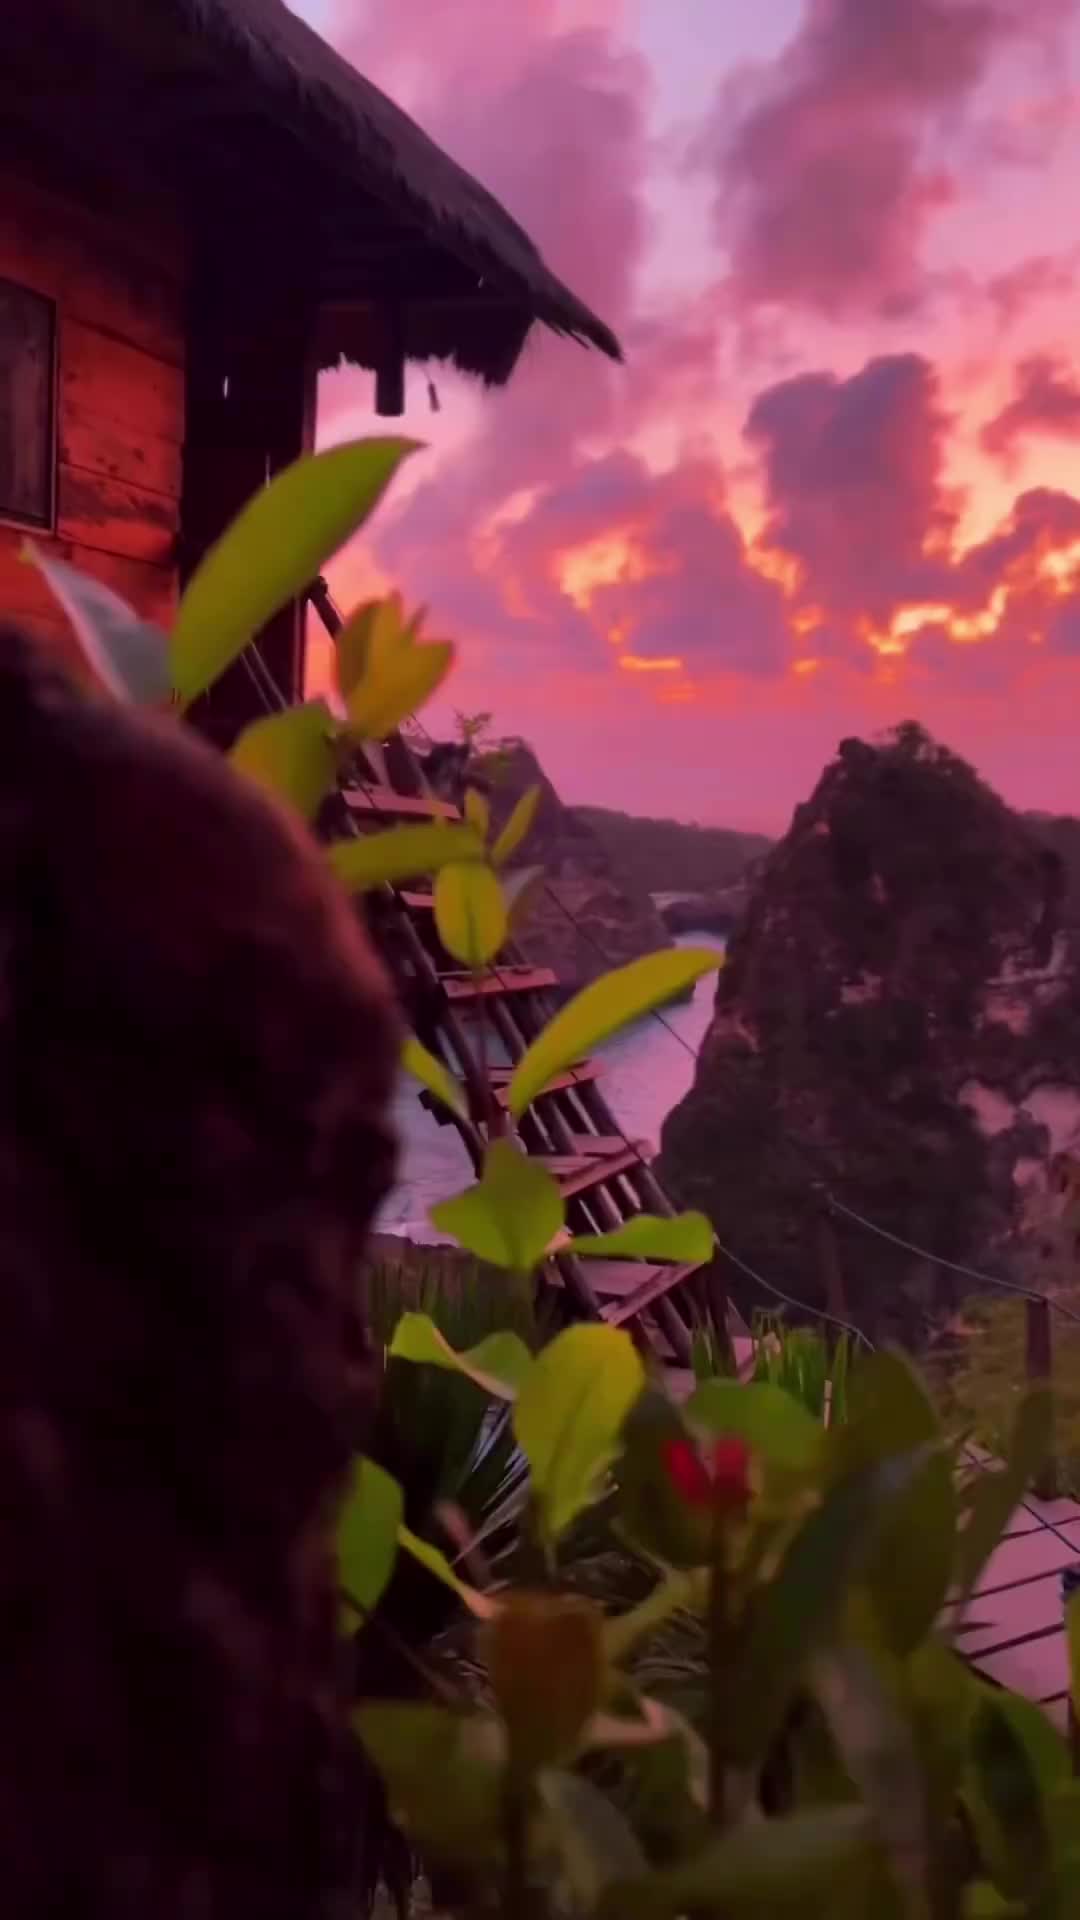 Stunning Bali Sunset: A Promise of New Beginnings